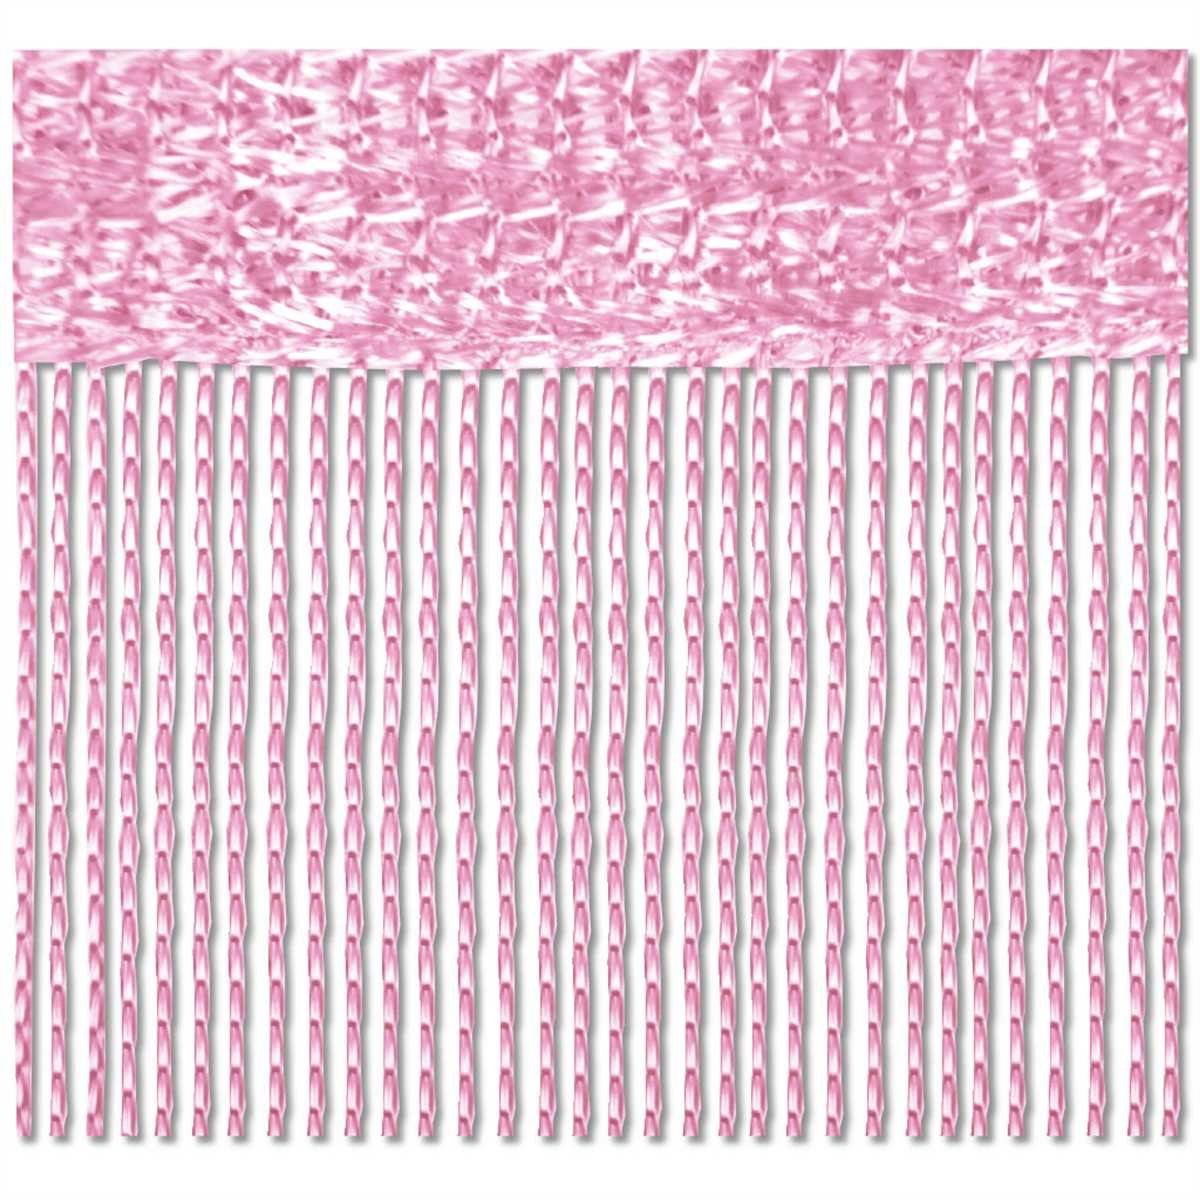 Vorhang, Bestlivings, Stangendurchzug, halbtransparent, Fadengardine mit Stangendurchzug in 140cm x 240cm (BxL), viele vers. Farben Pink